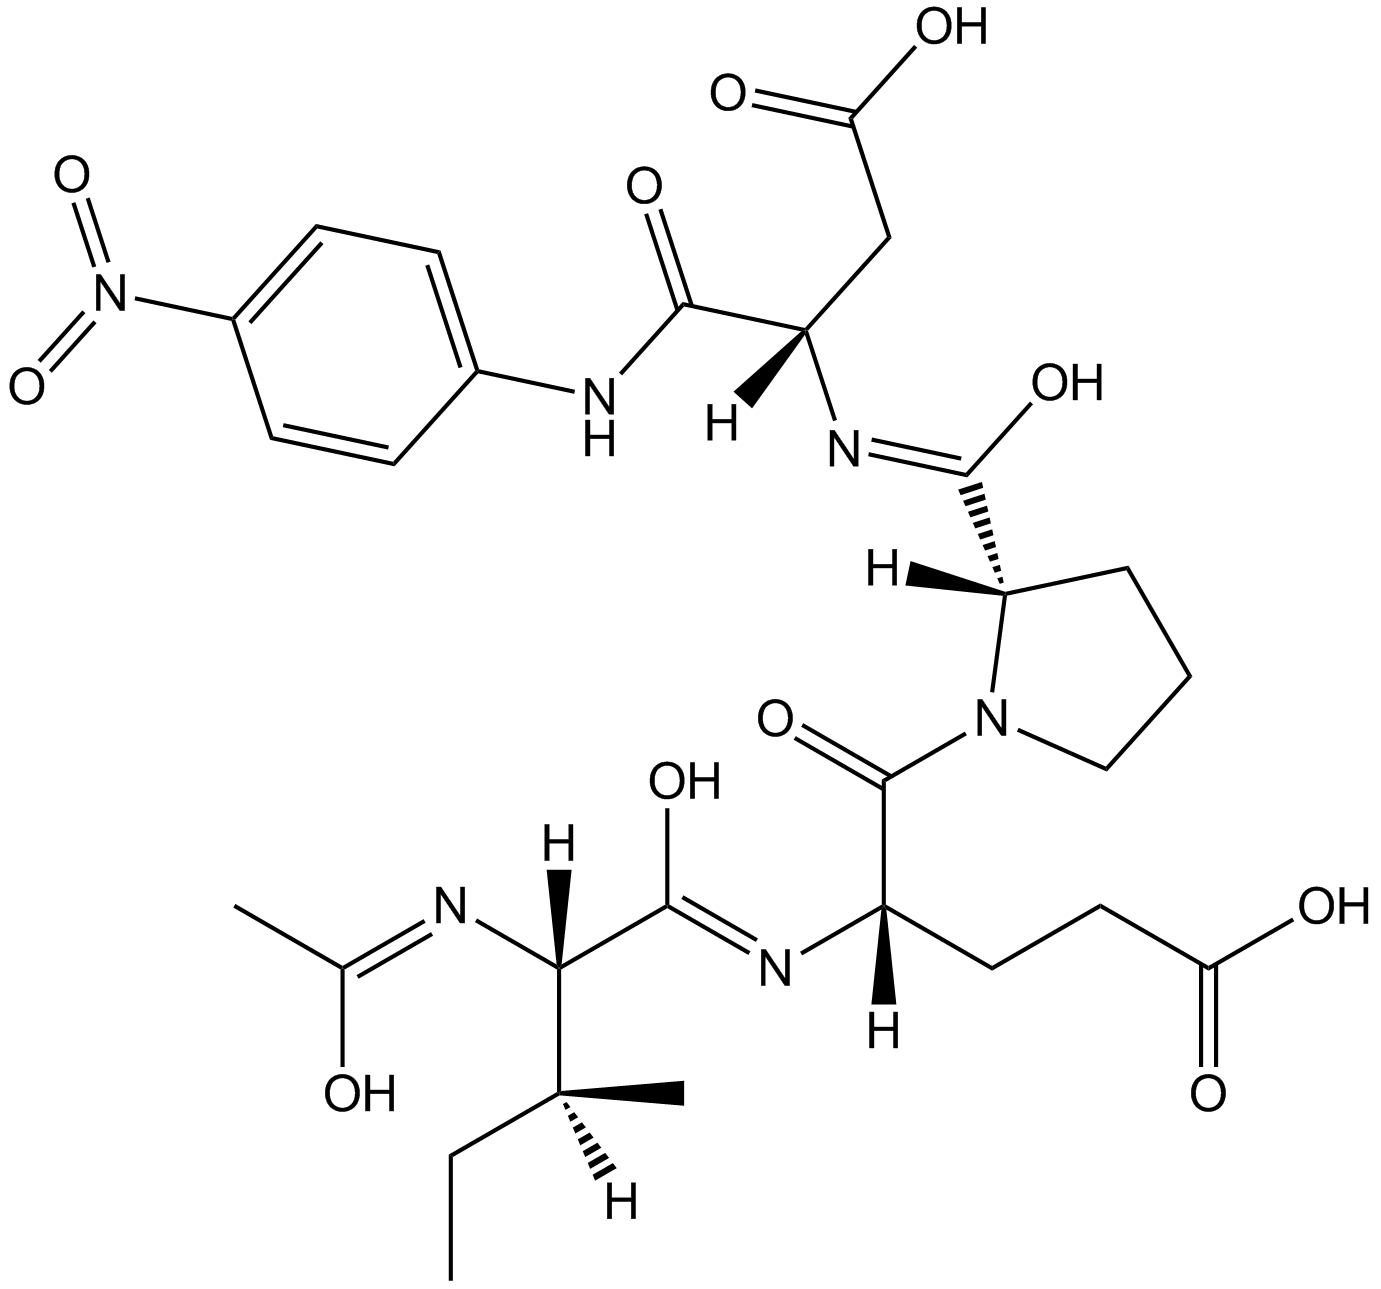 Ac-Ile-Glu-Pro-Asp-pNA Chemische Struktur